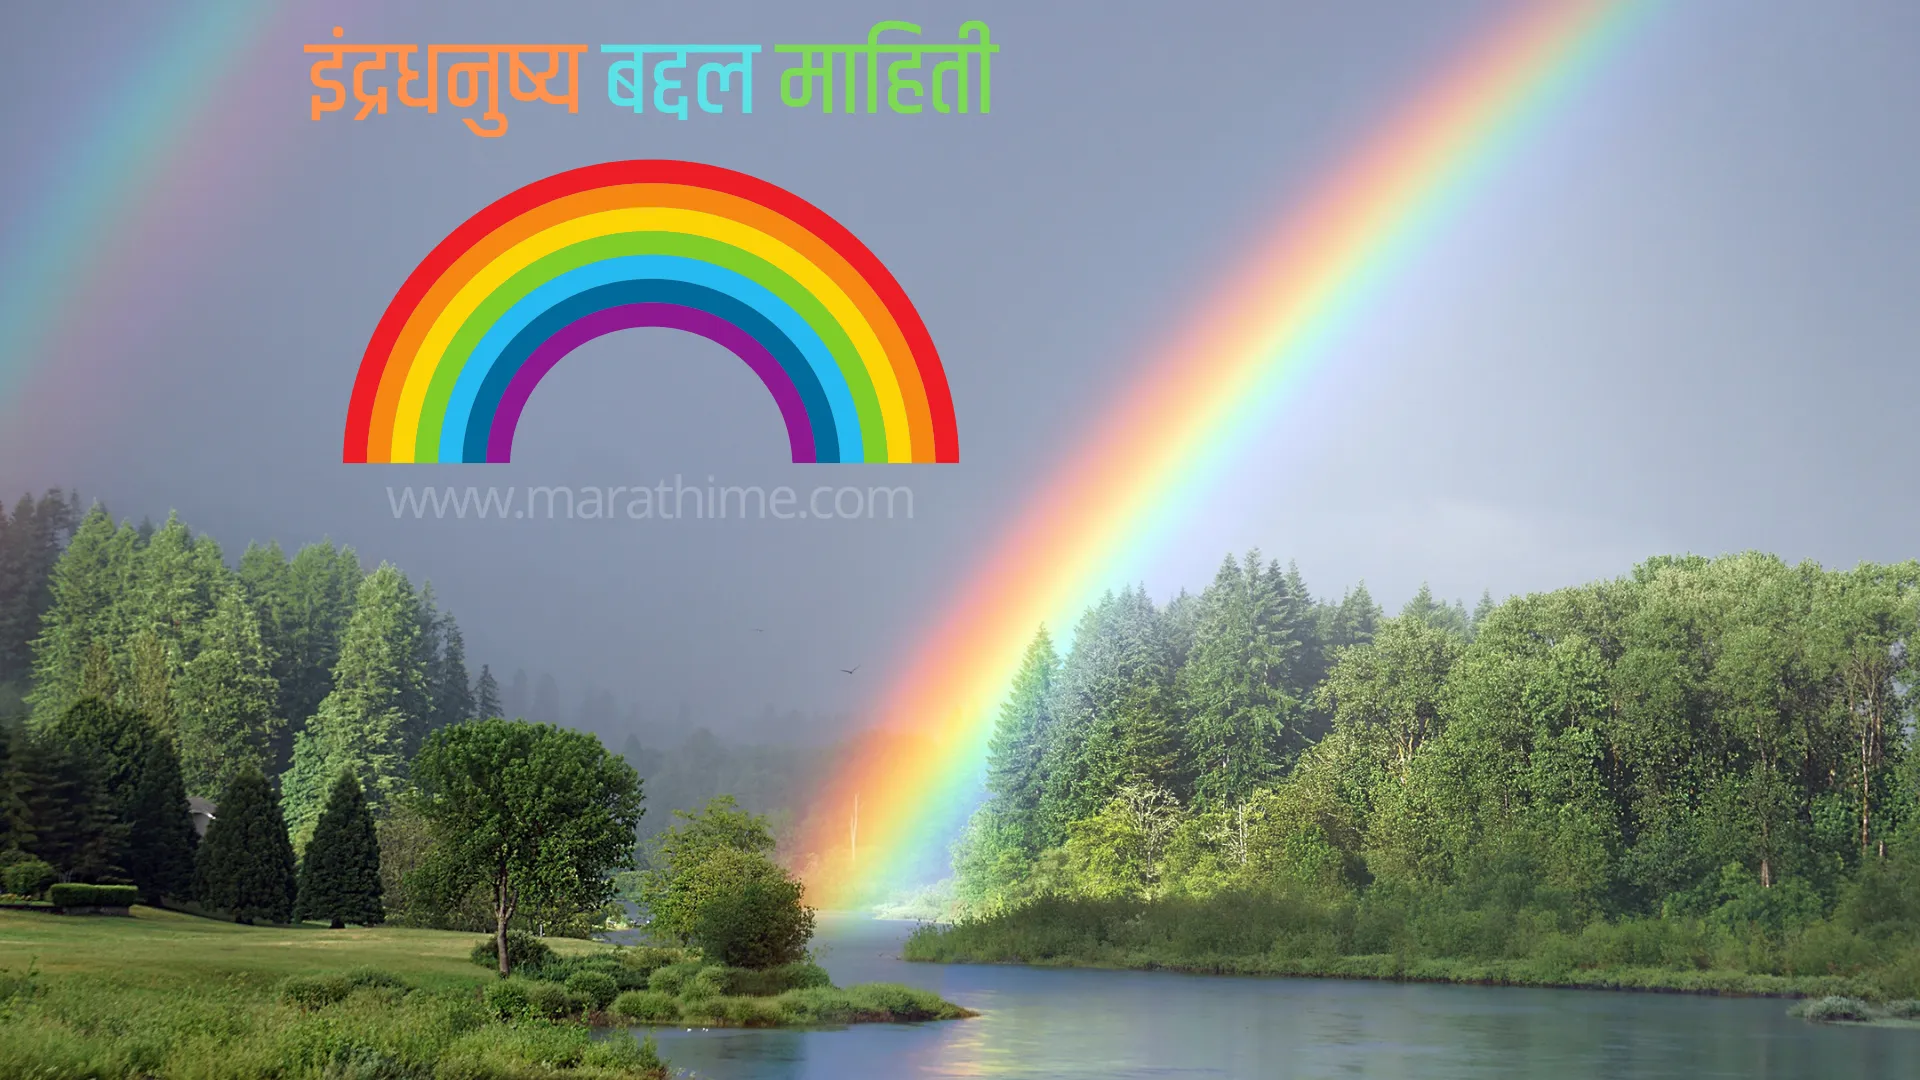 इंद्रधनुष्य बद्दल माहिती-Rainbow Information in Marathi